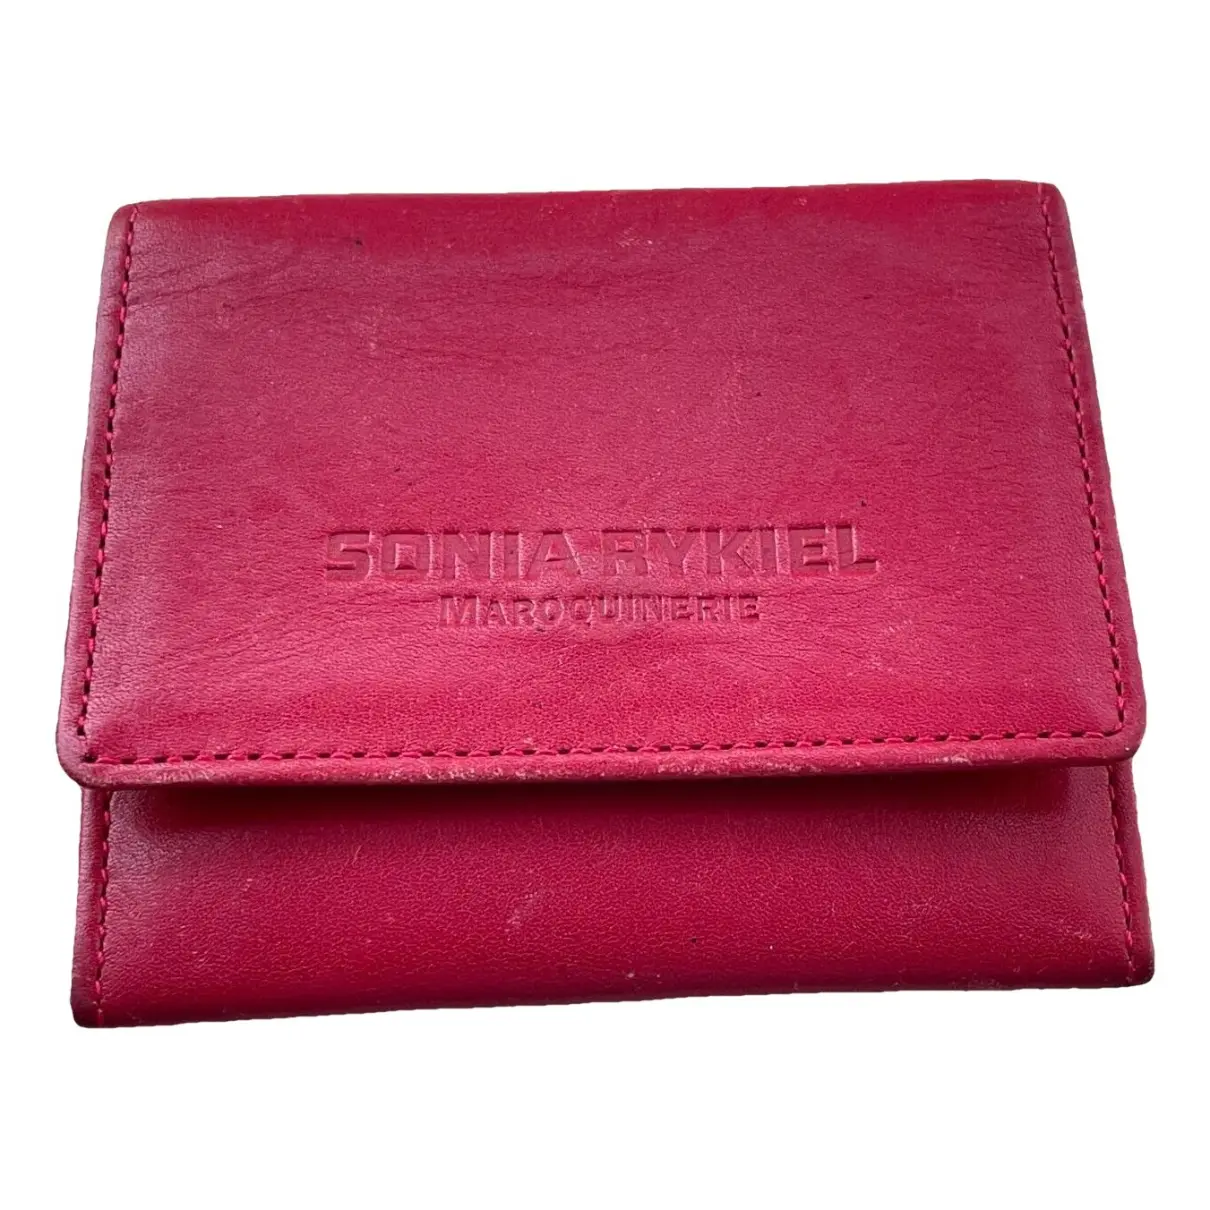 Leather wallet Sonia Rykiel - Vintage